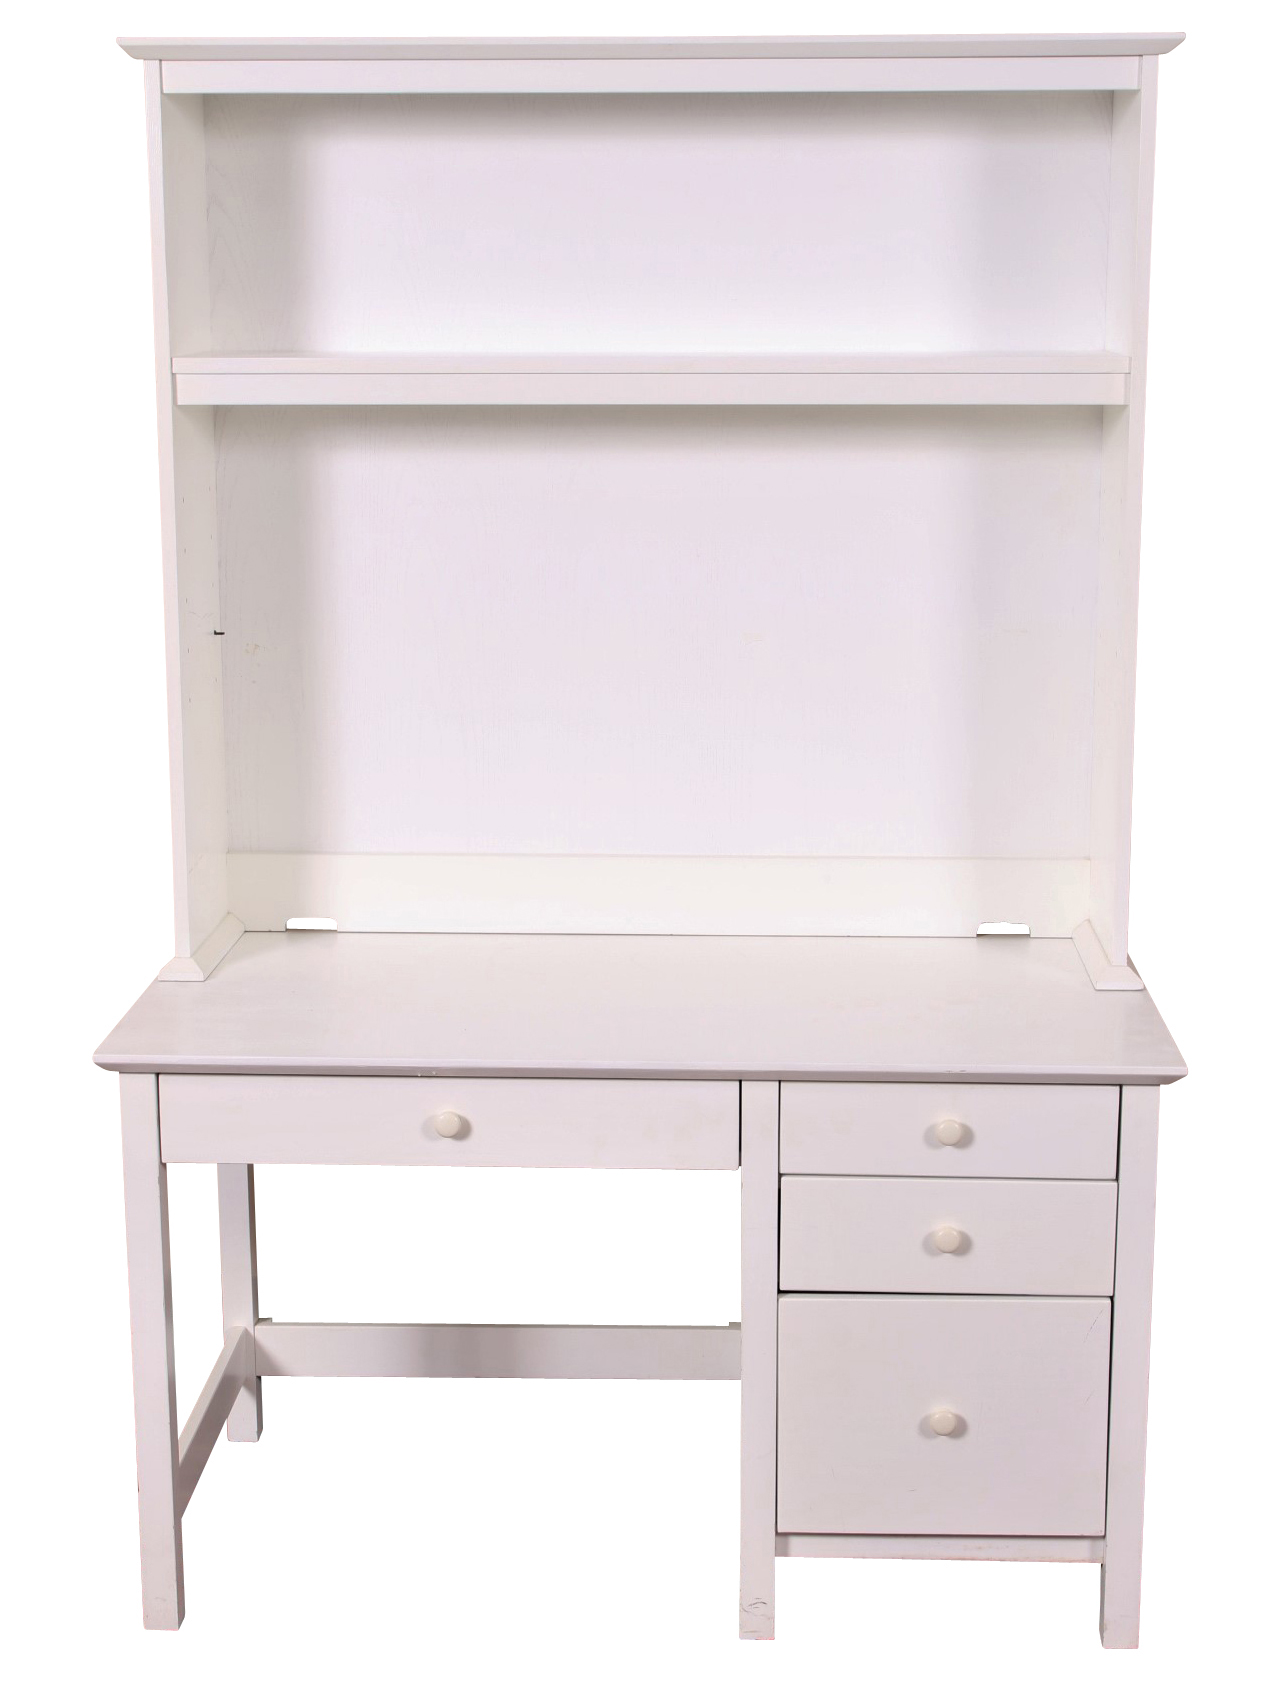 Vermont Tubbs White Desk With 2 Shelf Hutch 2nd Shelf Not Shown